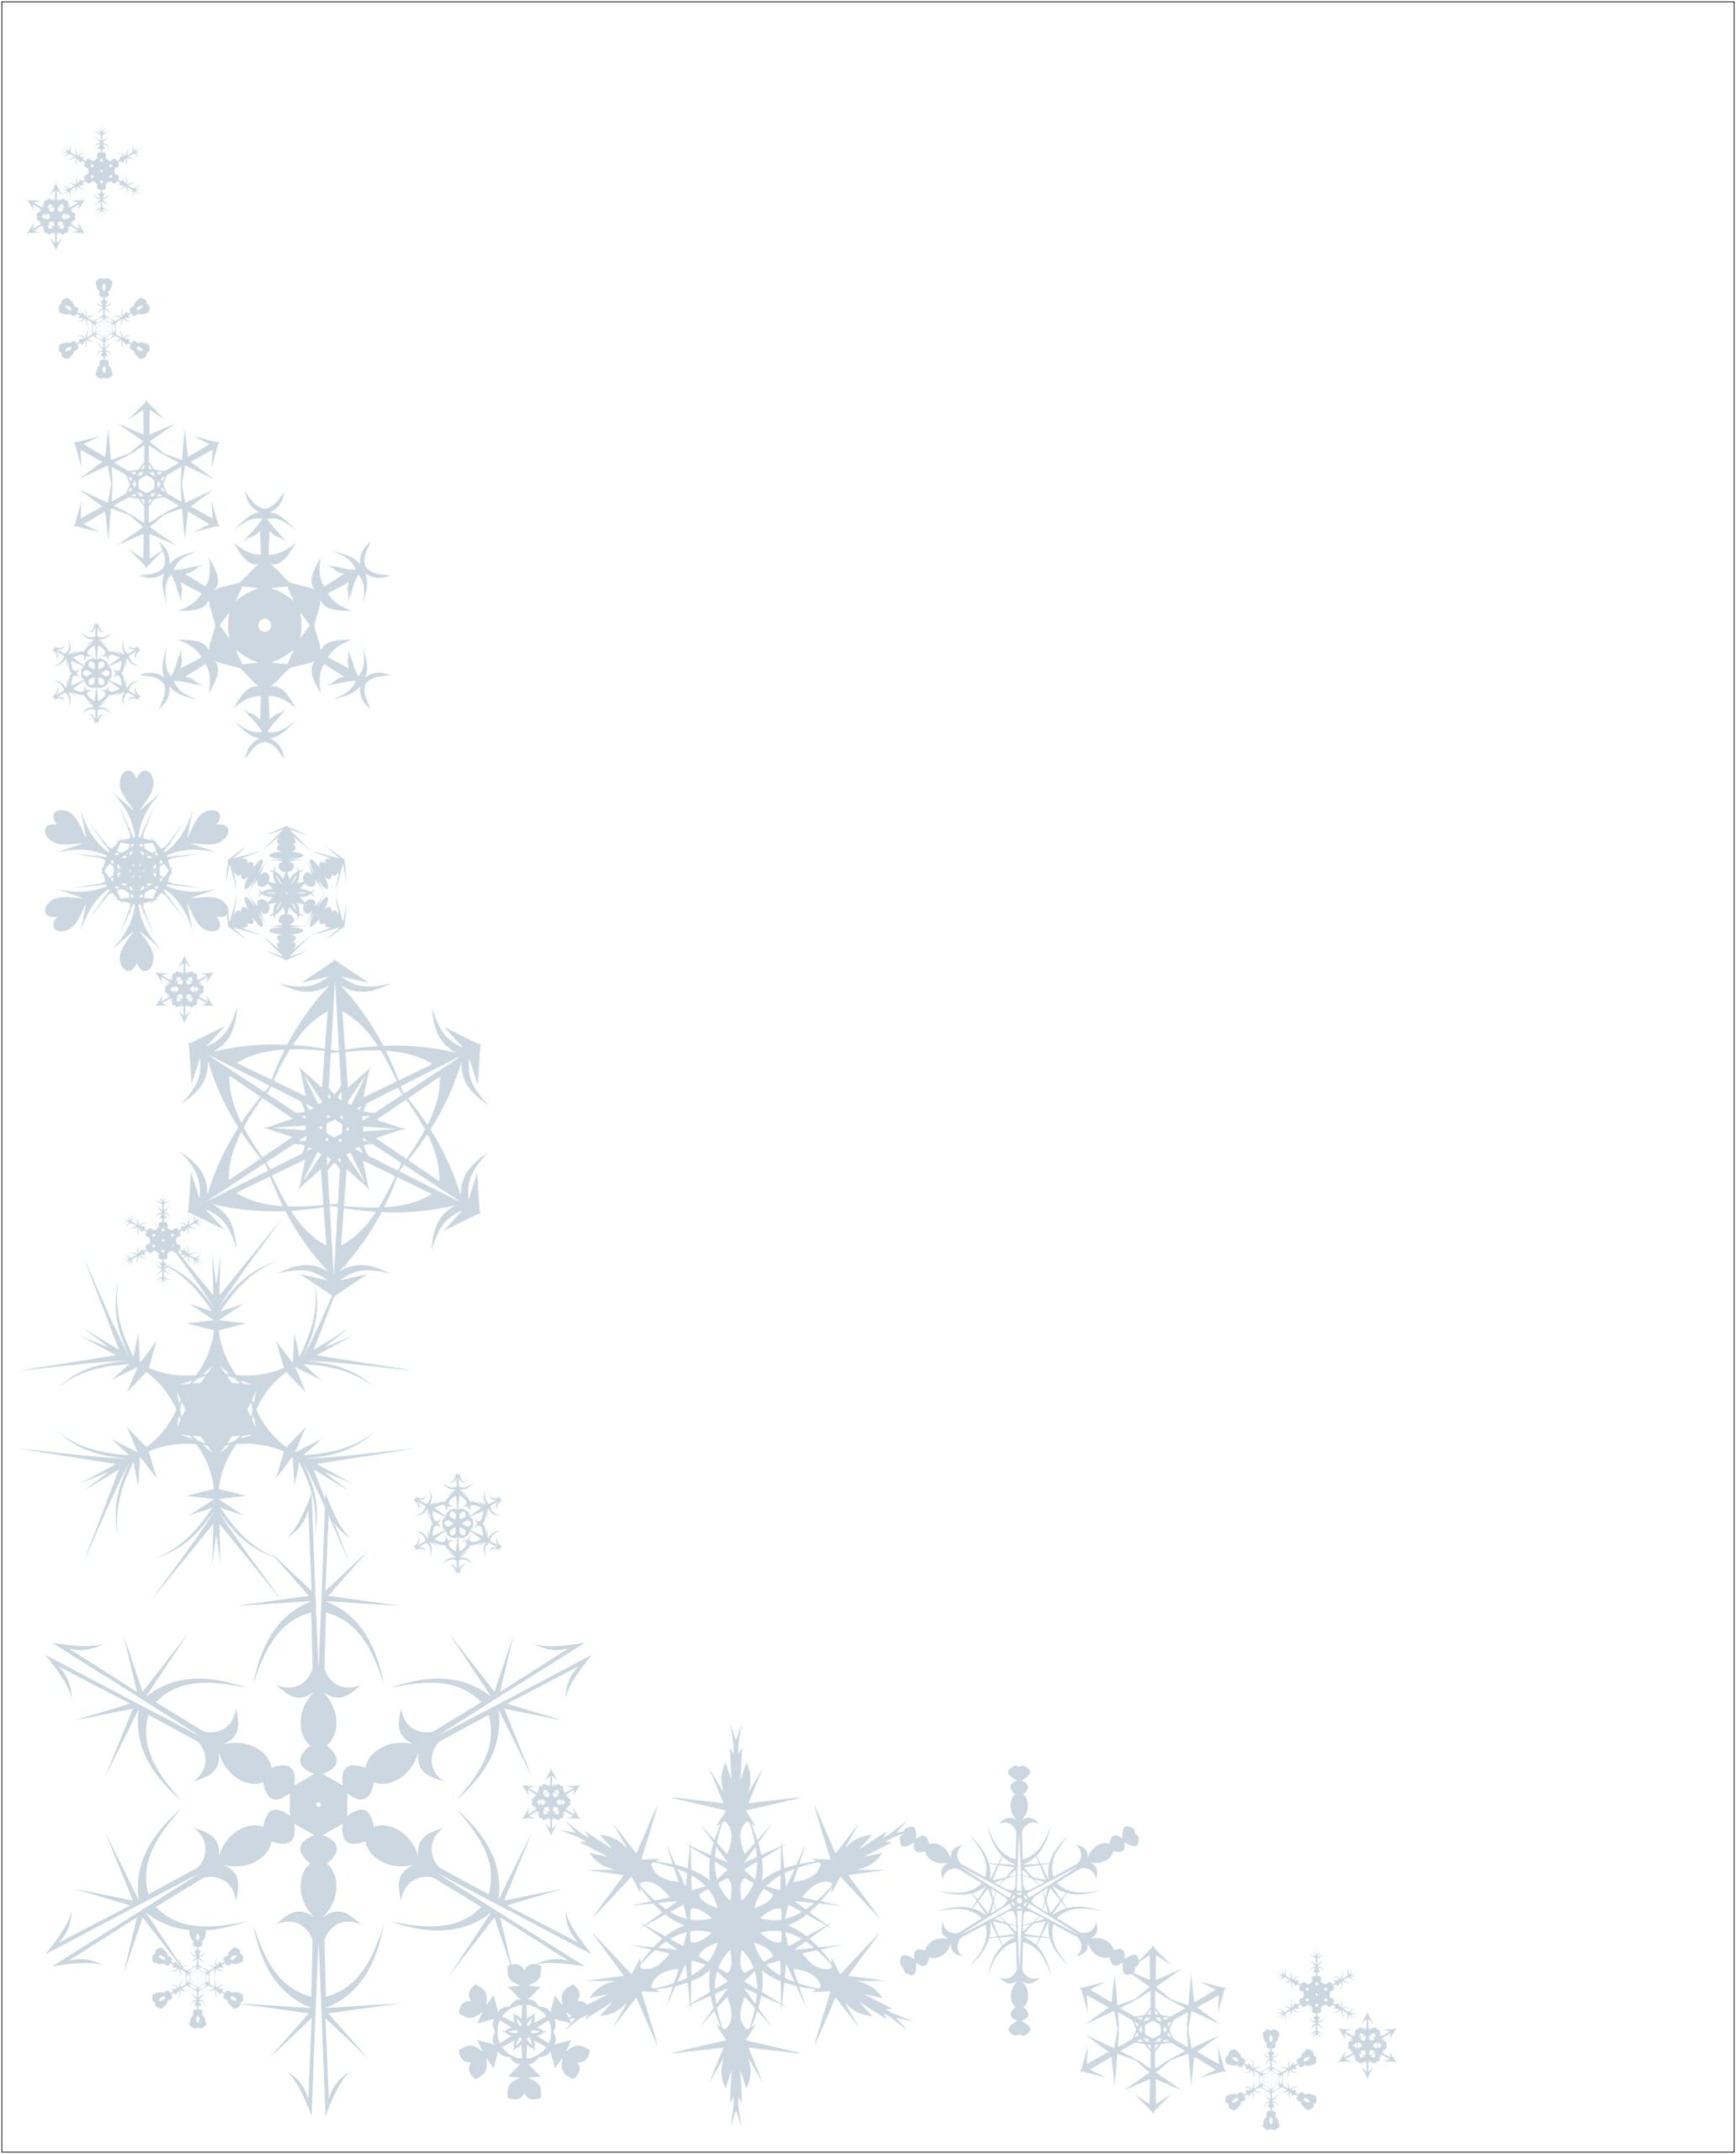 Sparkly Silverand Blue Snowflakes Border Free Template